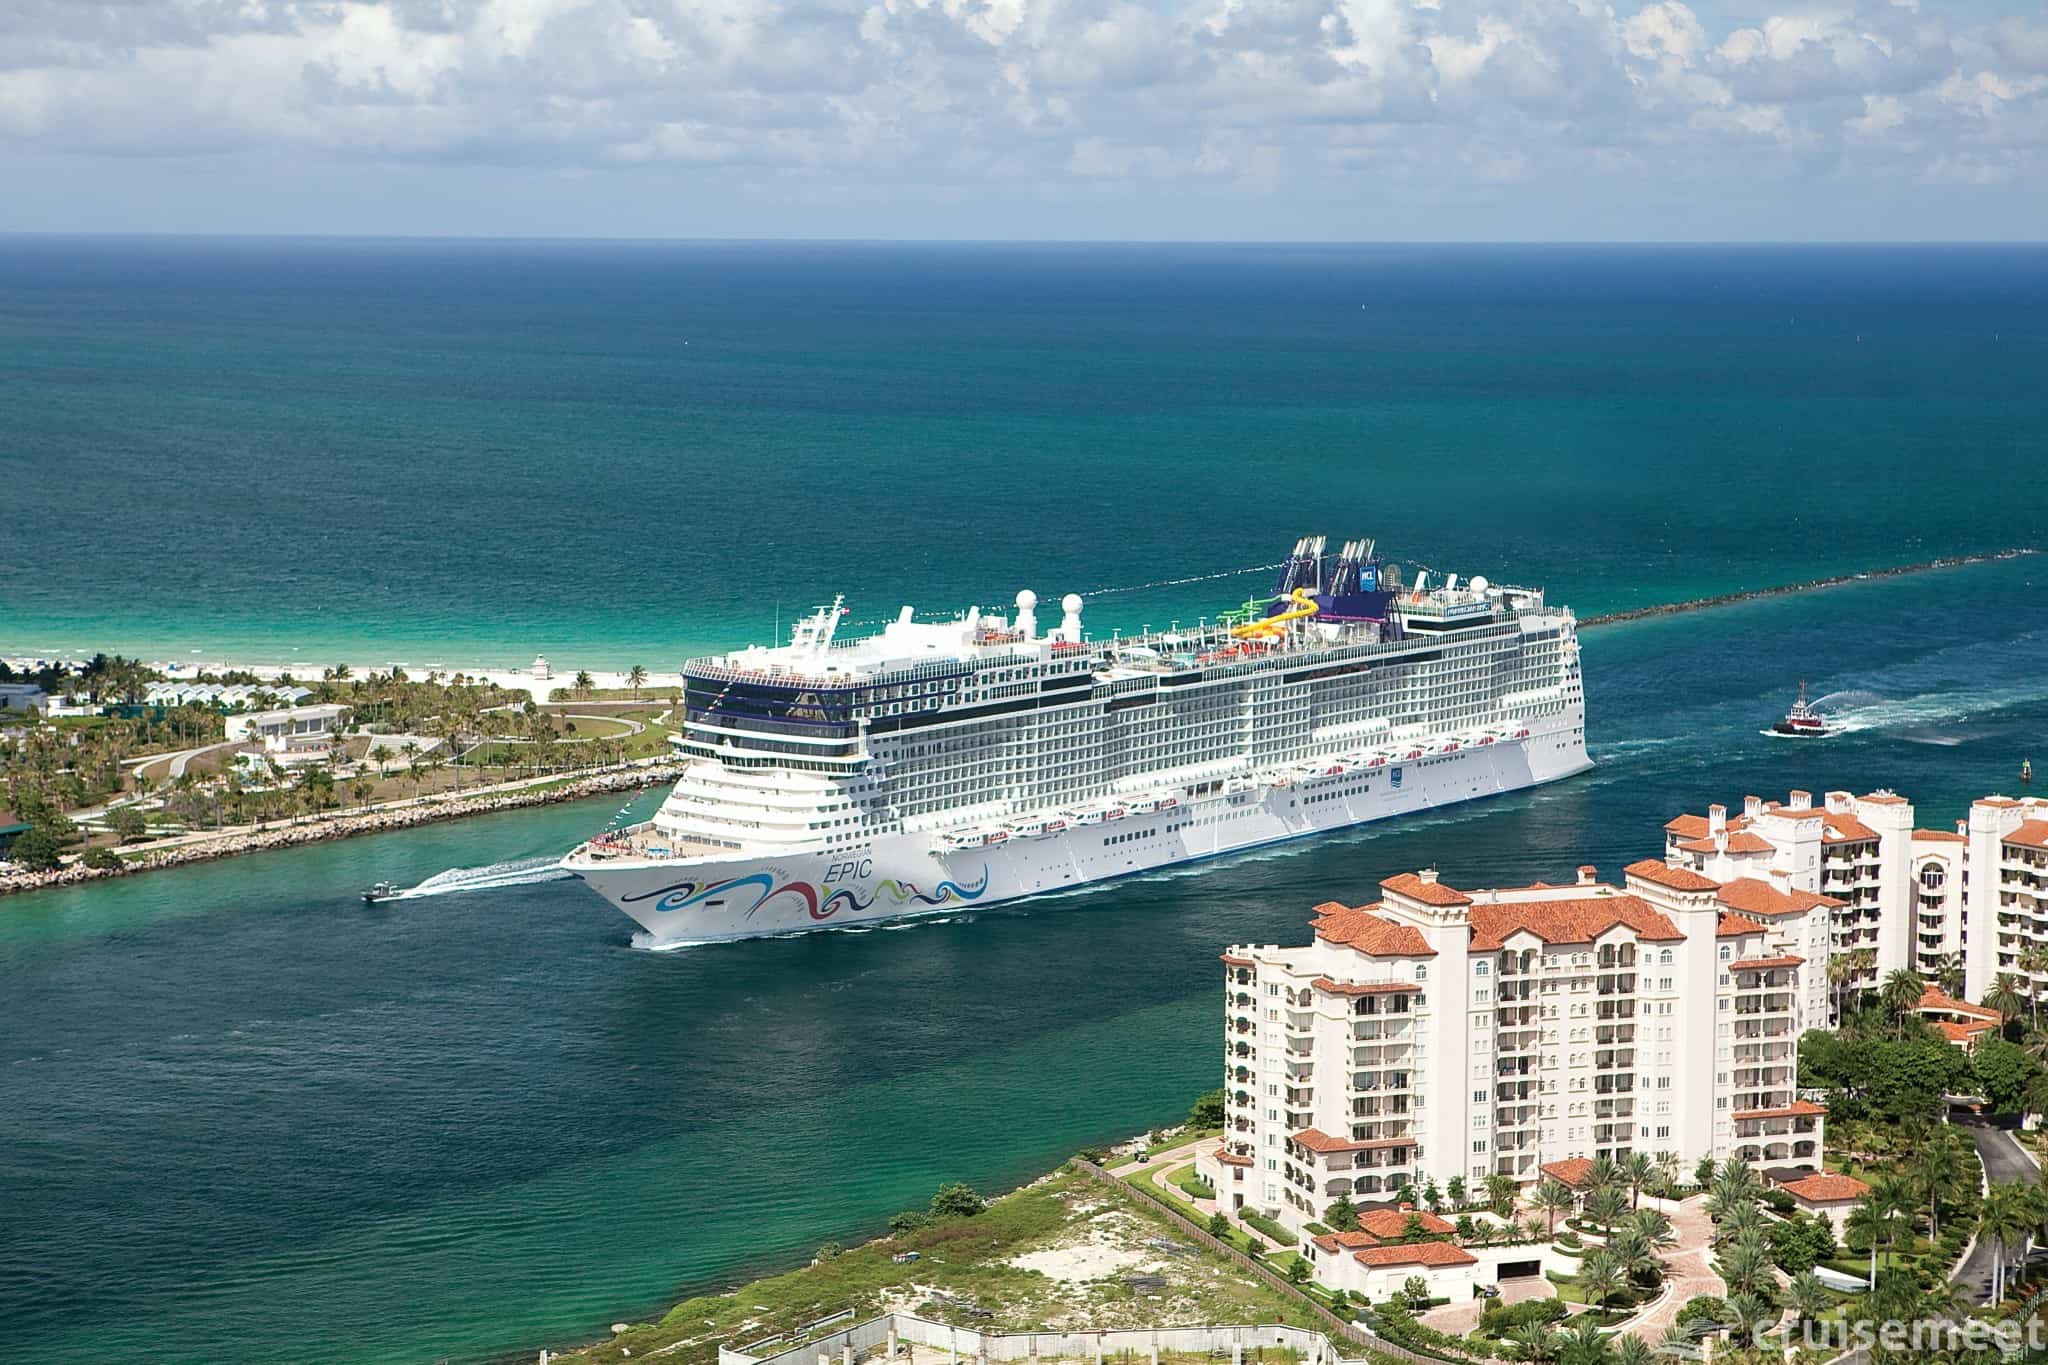 Norwegian Cruise Line - Norwegian EPIC approaching Miami